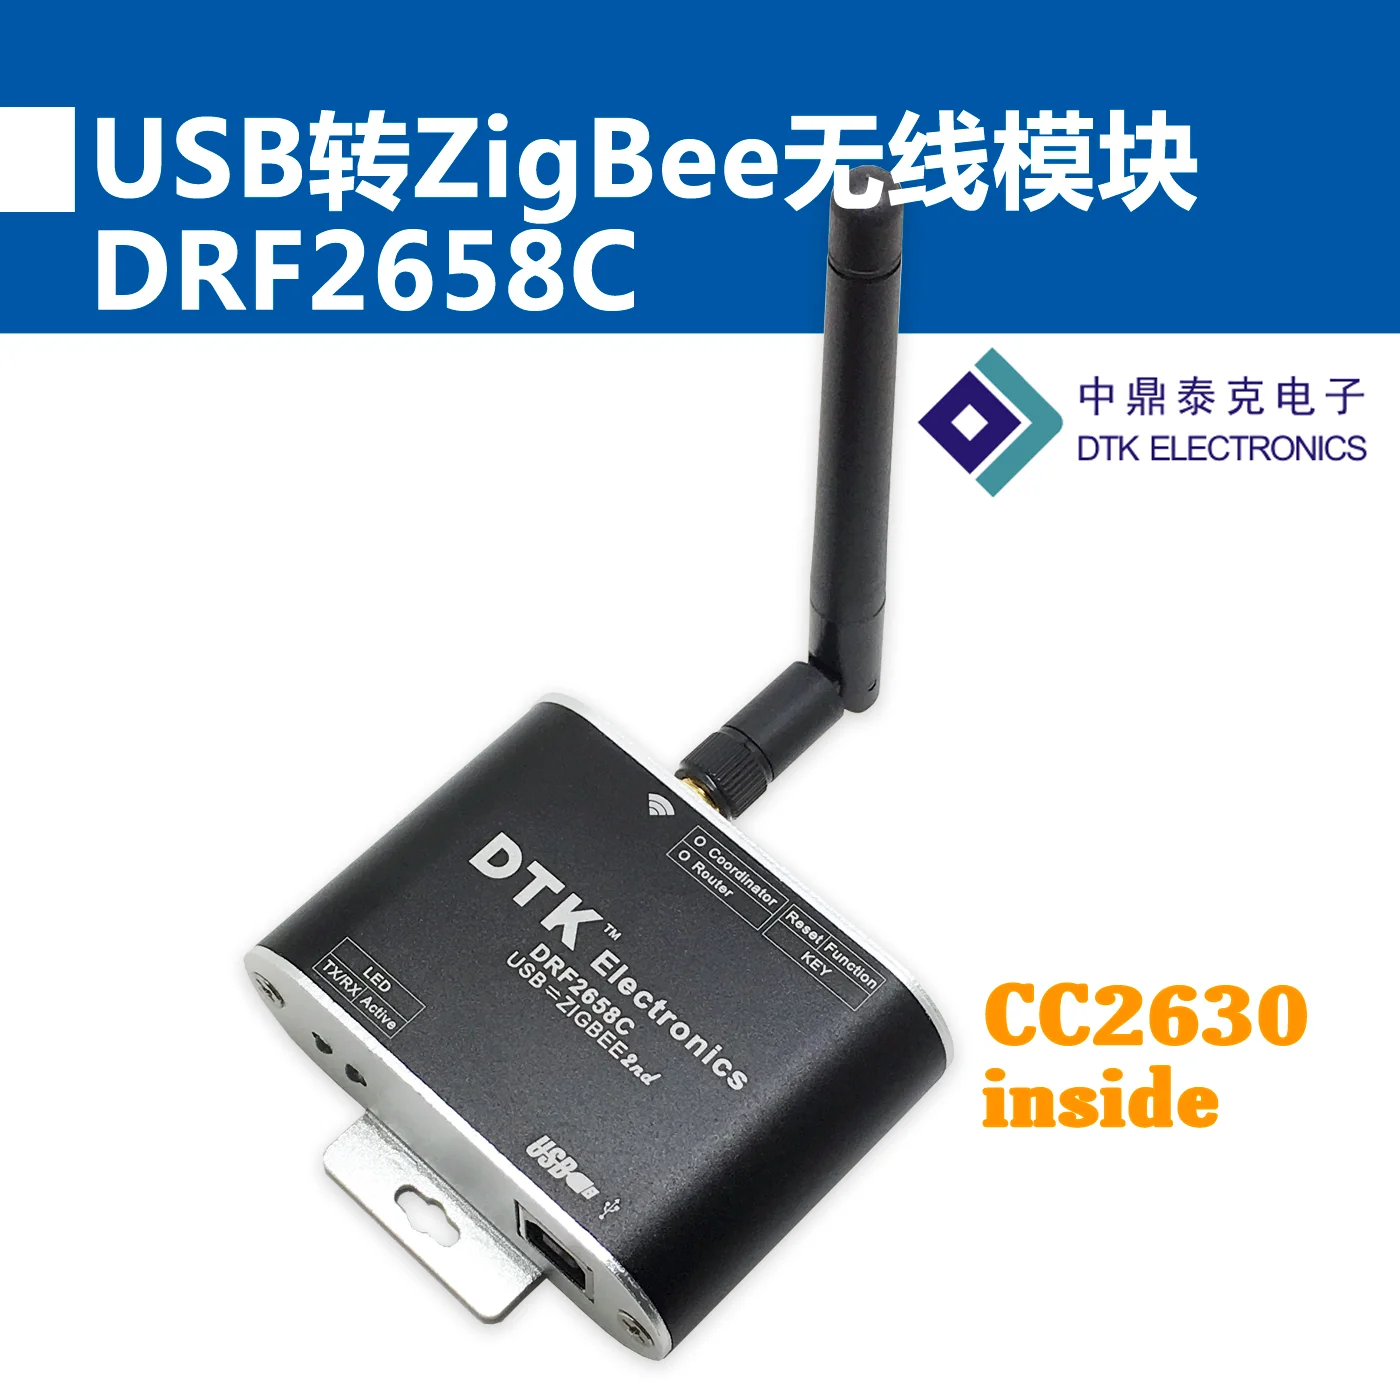 USB to ZigBee Wireless Module (1.6km Transmission, CC2630 Chip, Super CC2530) DRF2658C